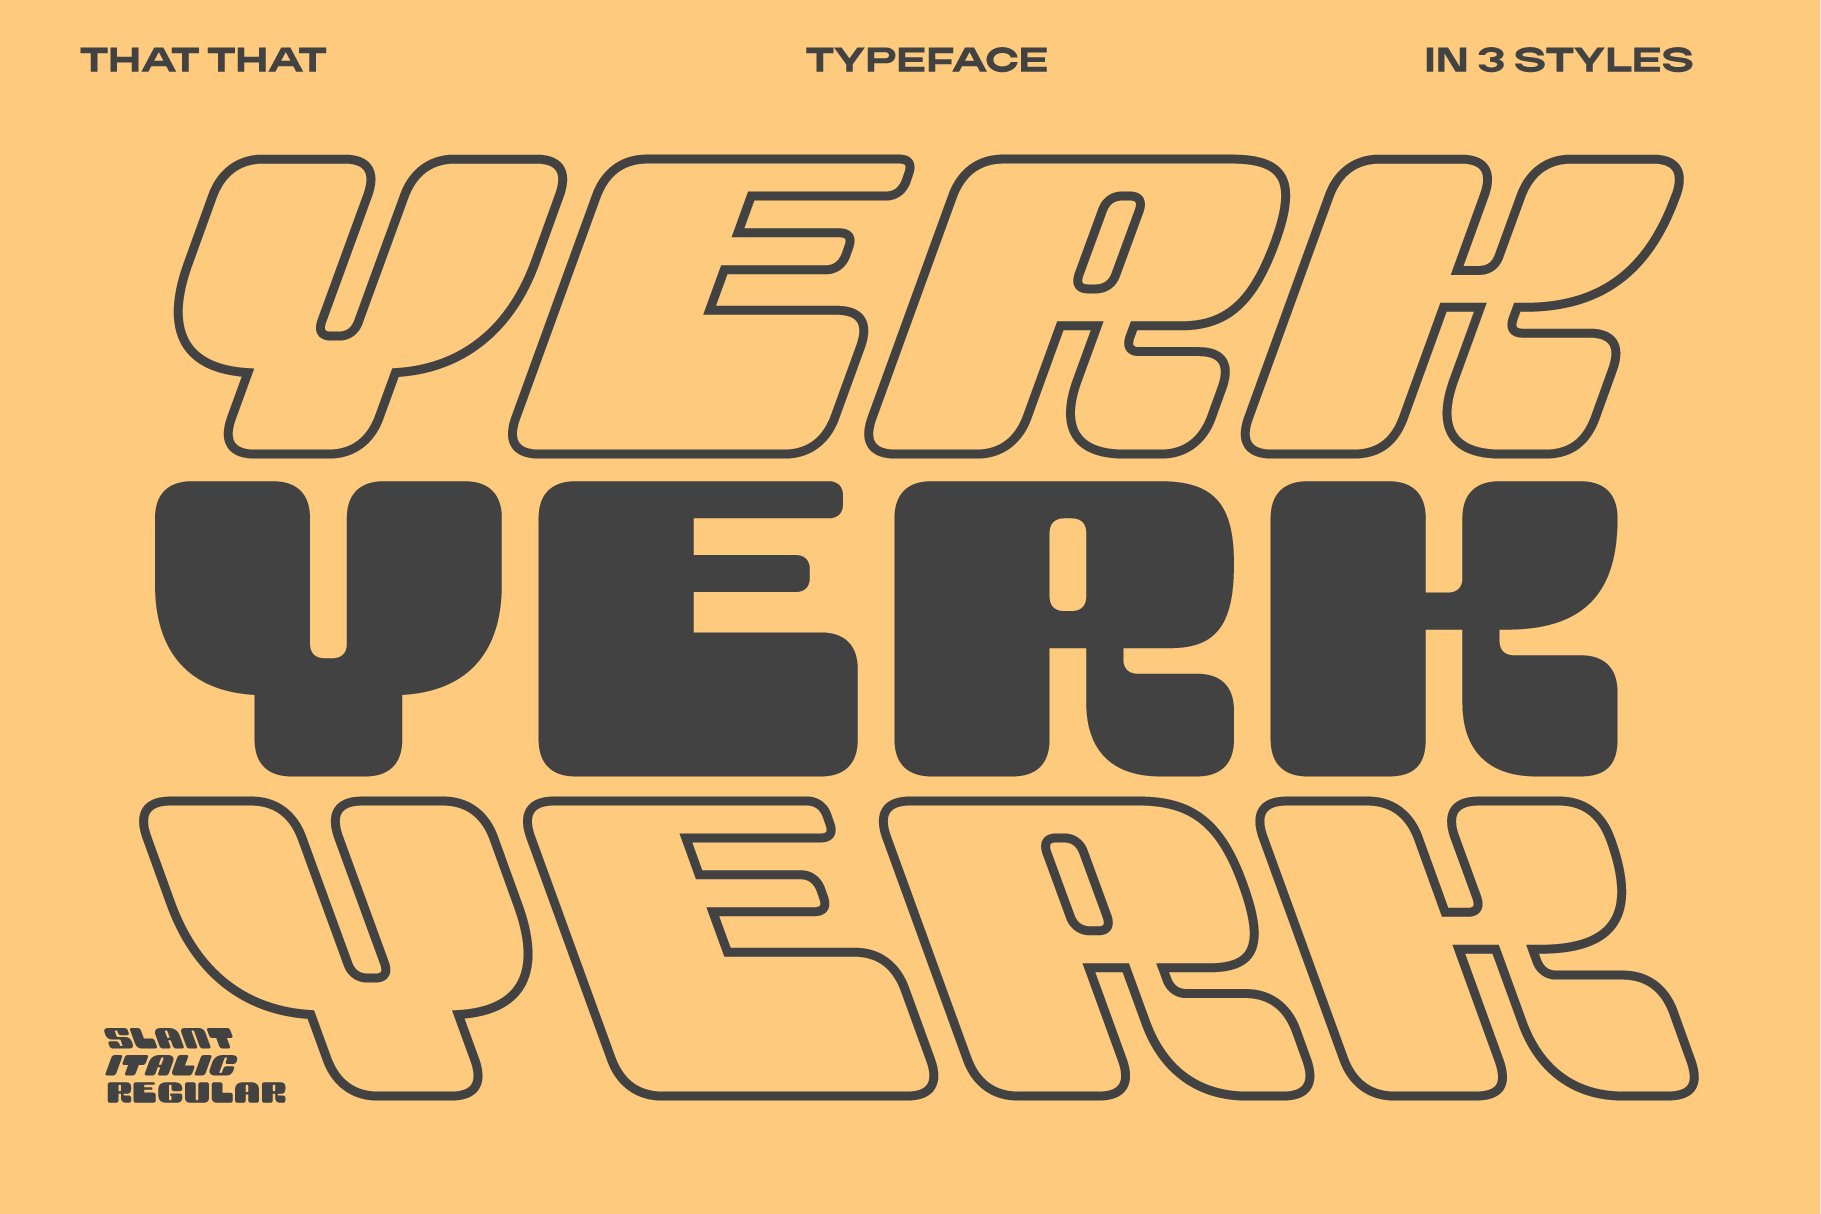 Yerk Y2K Font in 3 Styles cover image.